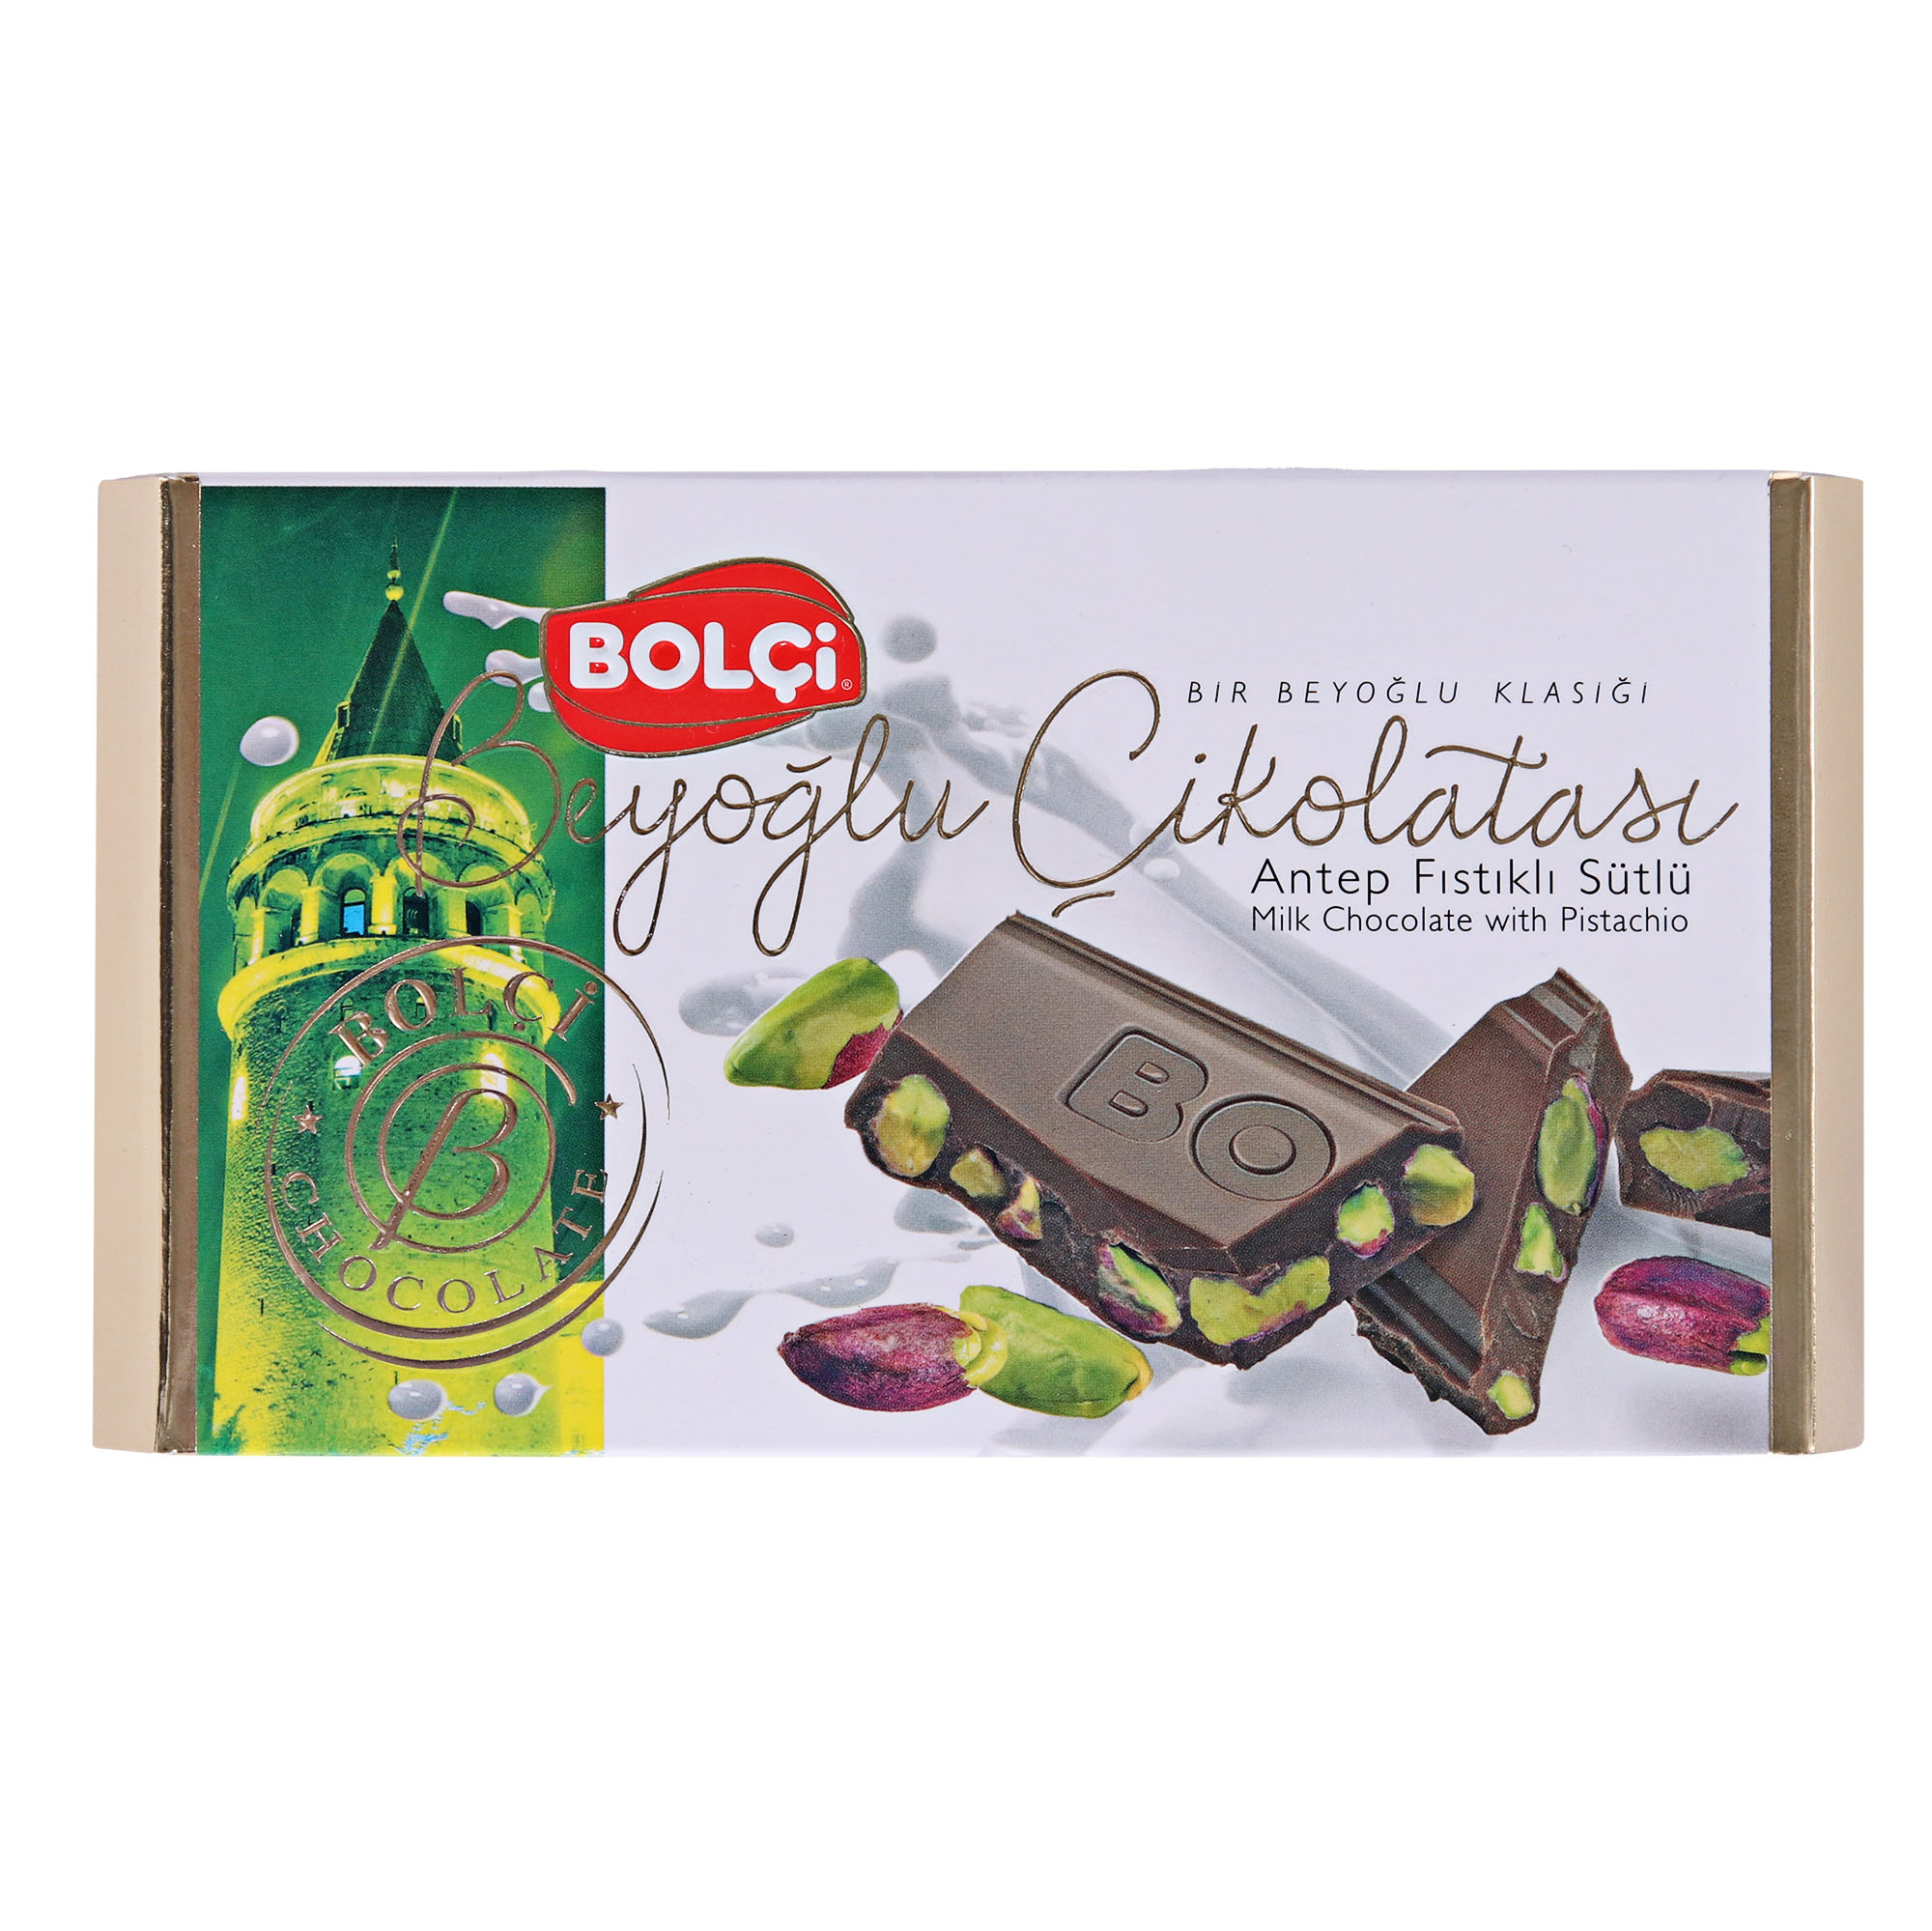 Молочный шоколад Bolci с цельной фисташкой, 150 г шоколад победа вкуса max energy молочный 36% какао без сахара 100 гр